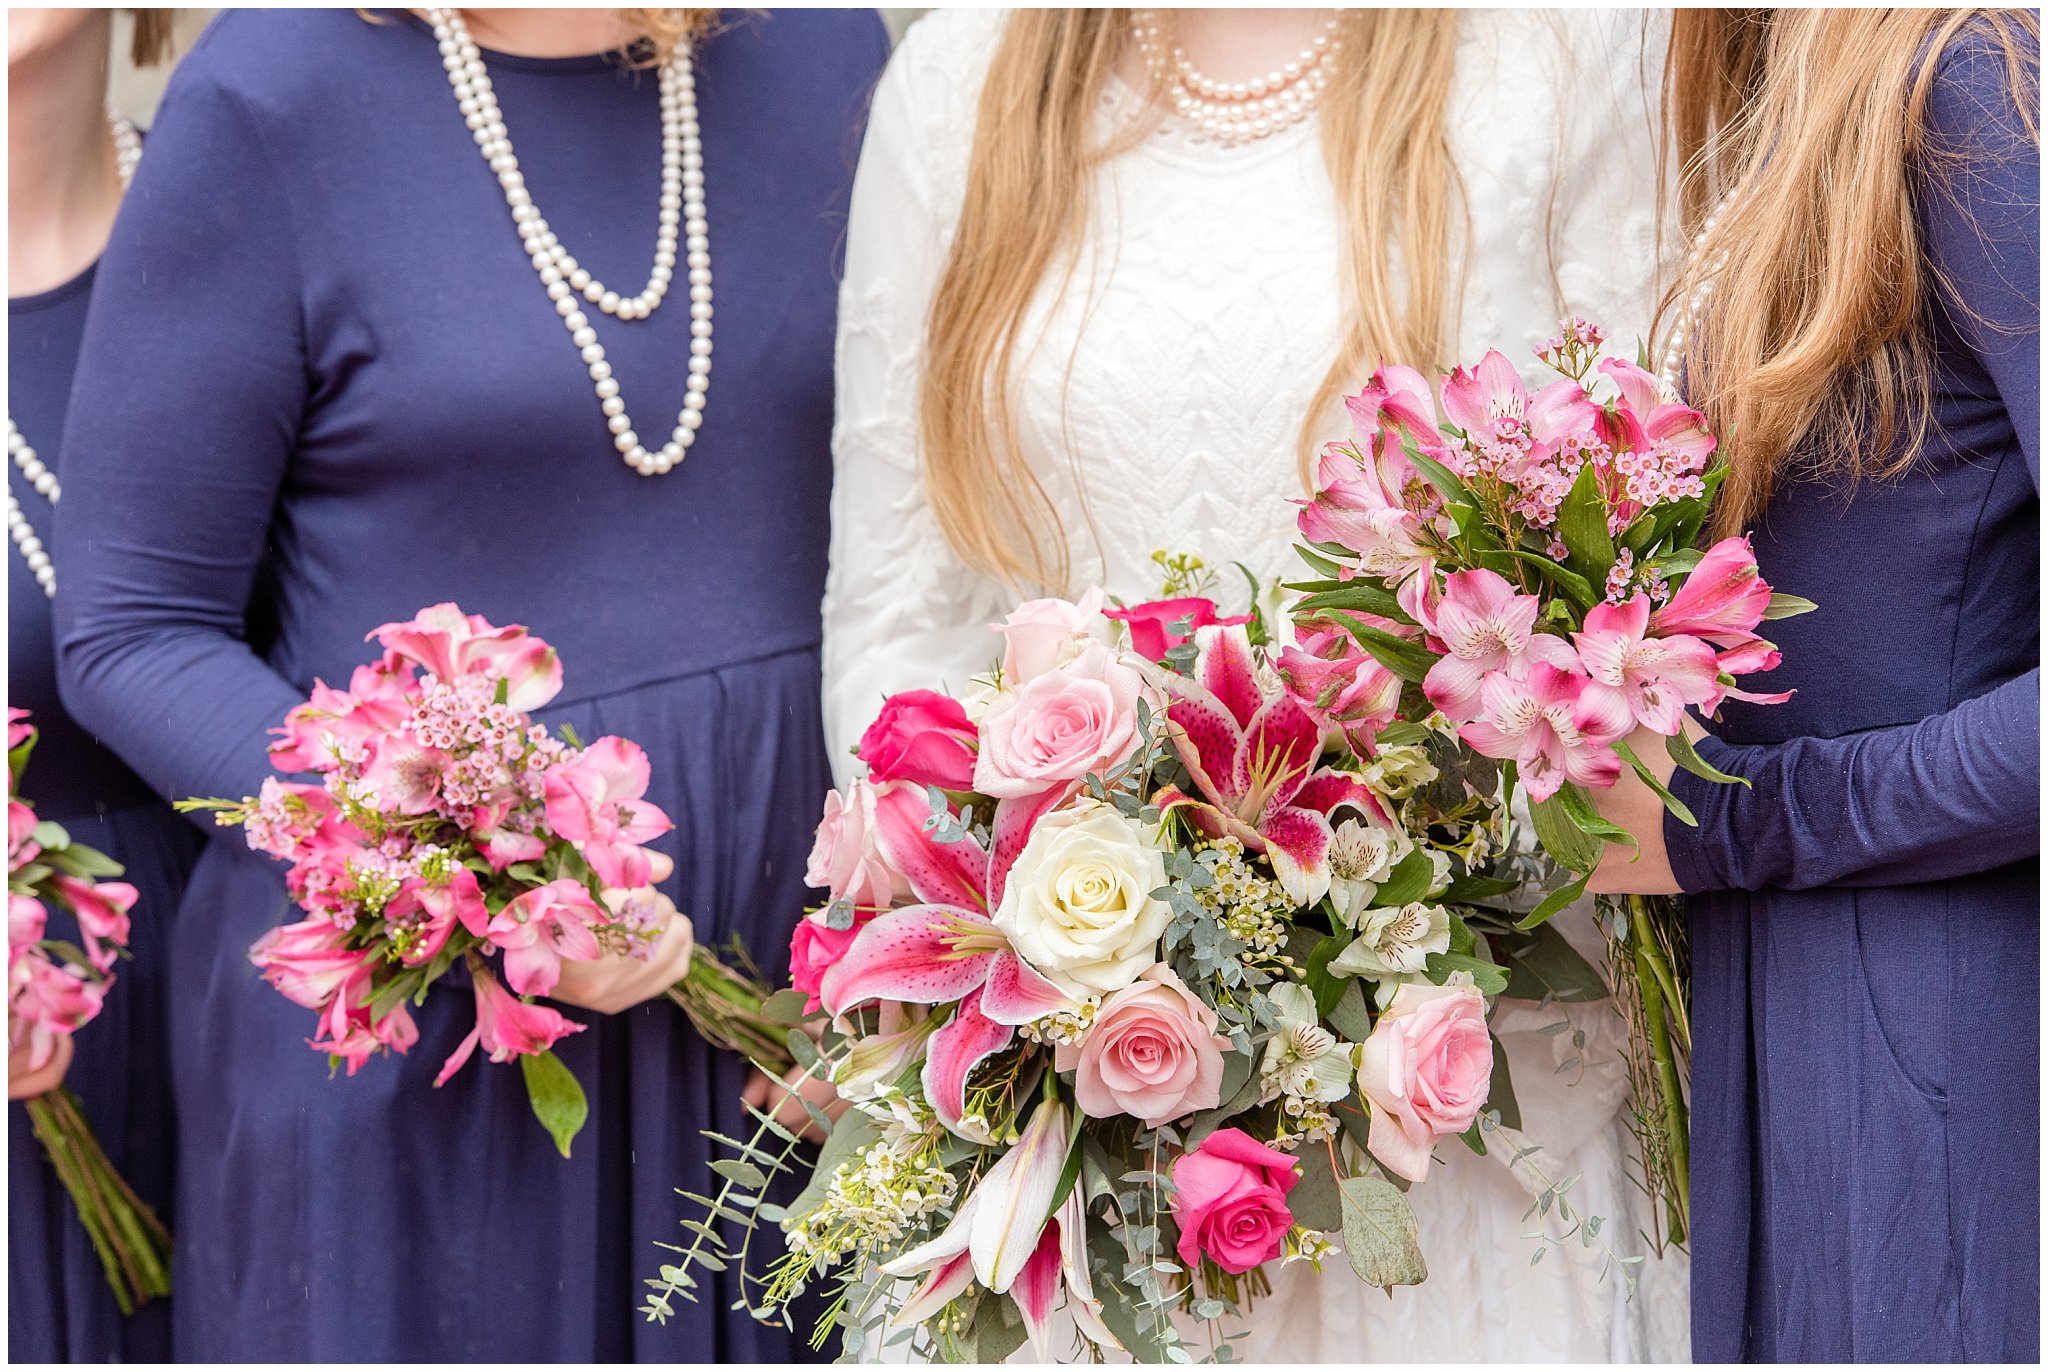 Salt Lake temple bridal party pictures | spring utah wedding | rose, raspberry, and navy wedding